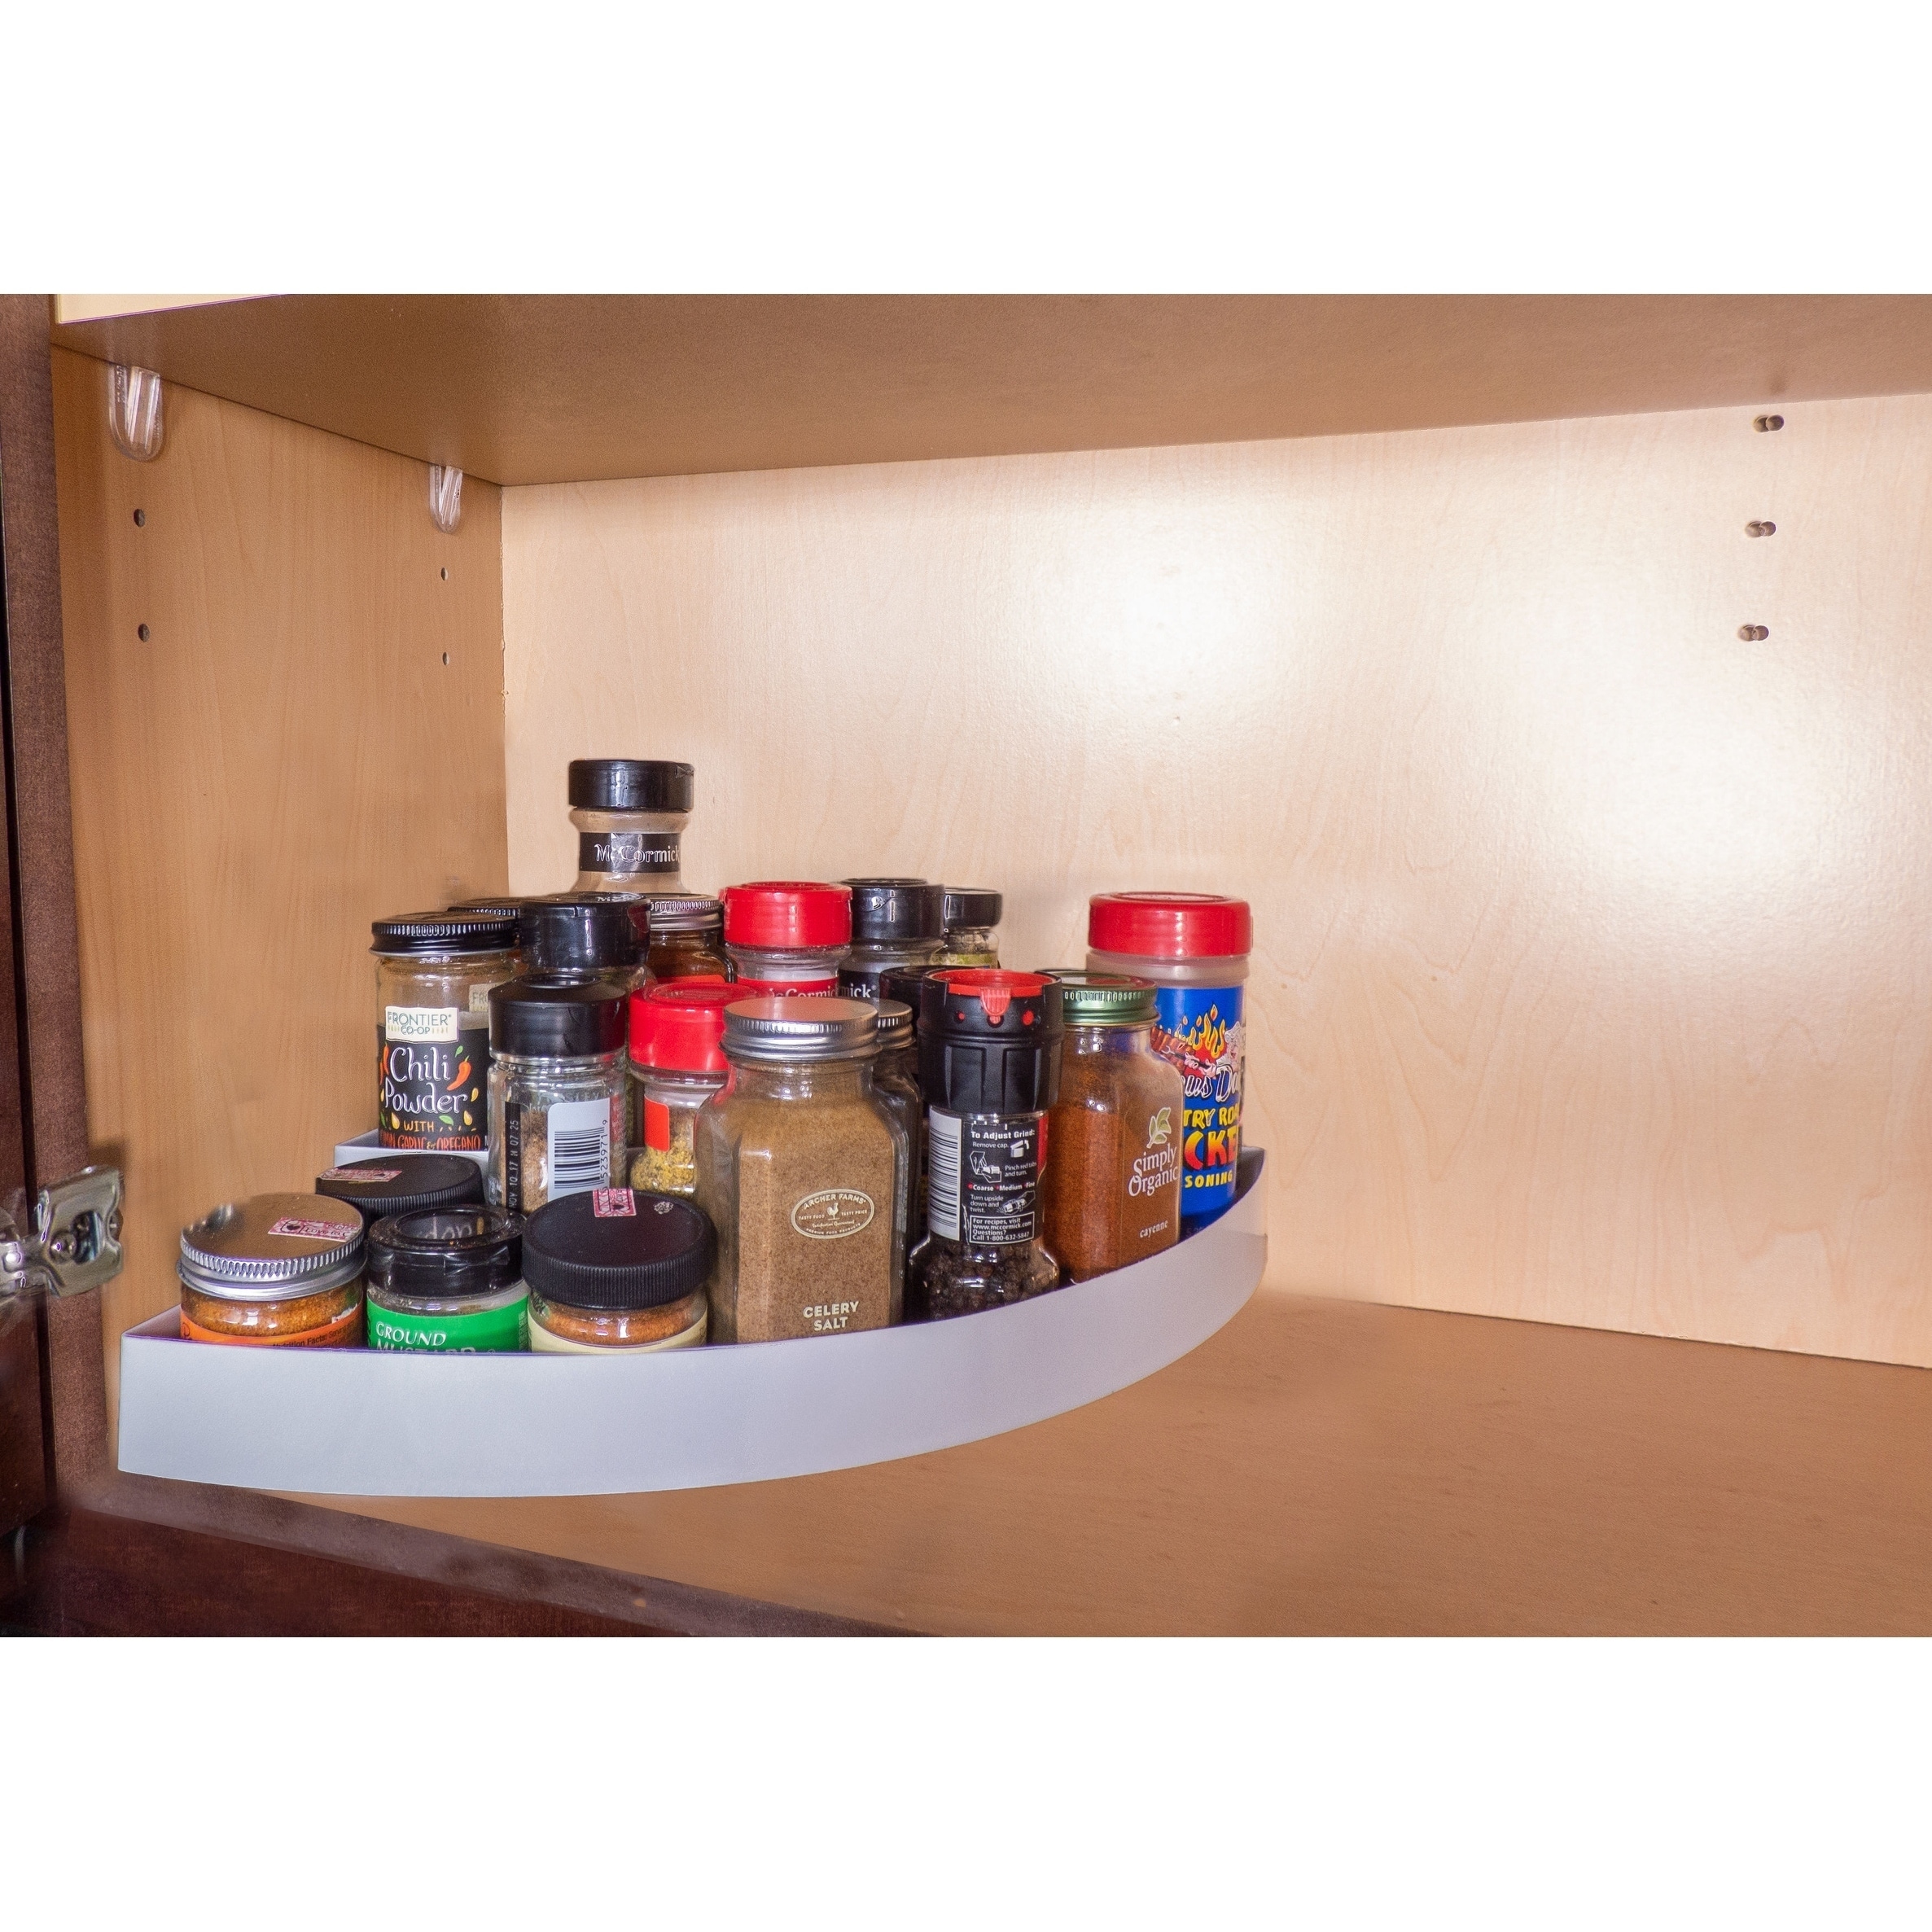 https://ak1.ostkcdn.com/images/products/30376947/Non-Slip-3-Tier-Spice-Rack-Step-Corner-Shelf-Organizer-For-Kitchen-Refrigerator-Pantry-Cabinet-Cupboards-Countertops-1cea6dcb-8ab7-4a41-b4b4-563f96febf28.jpg